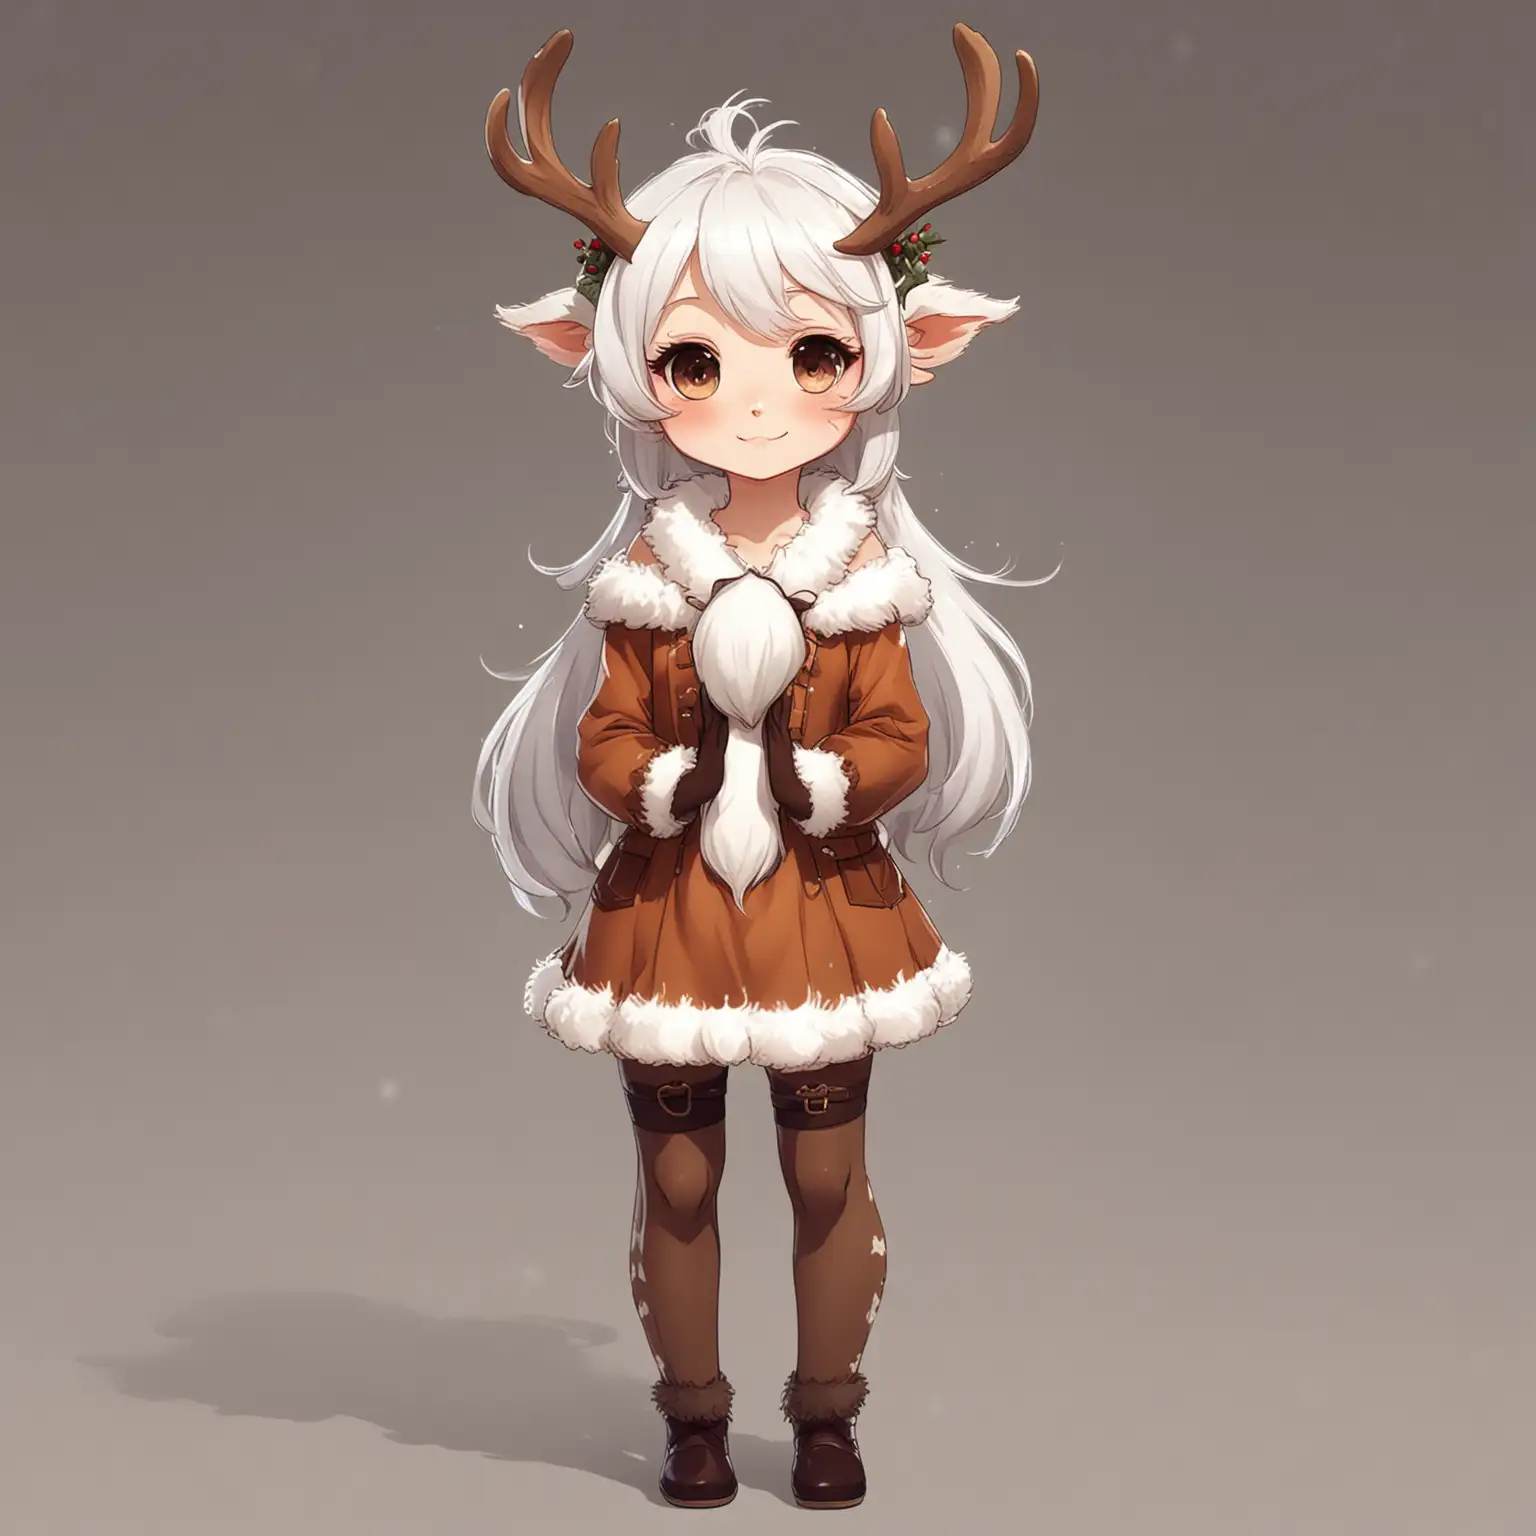 Cute Anime Reindeer Faun with White Hair Full Body